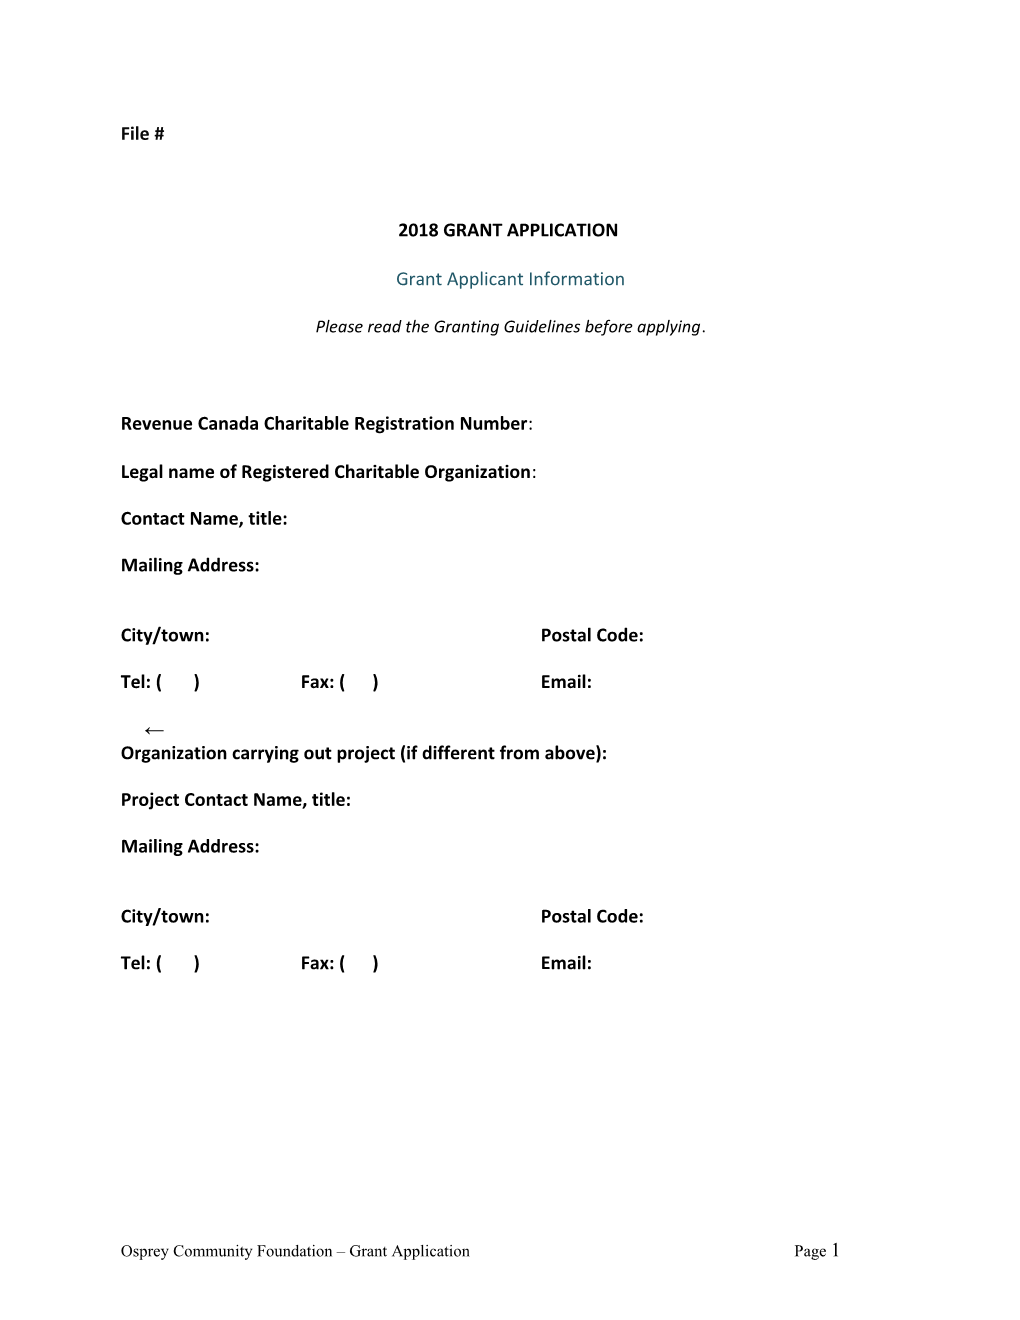 OCF Grant Application Form - Feb 25-04.PDF